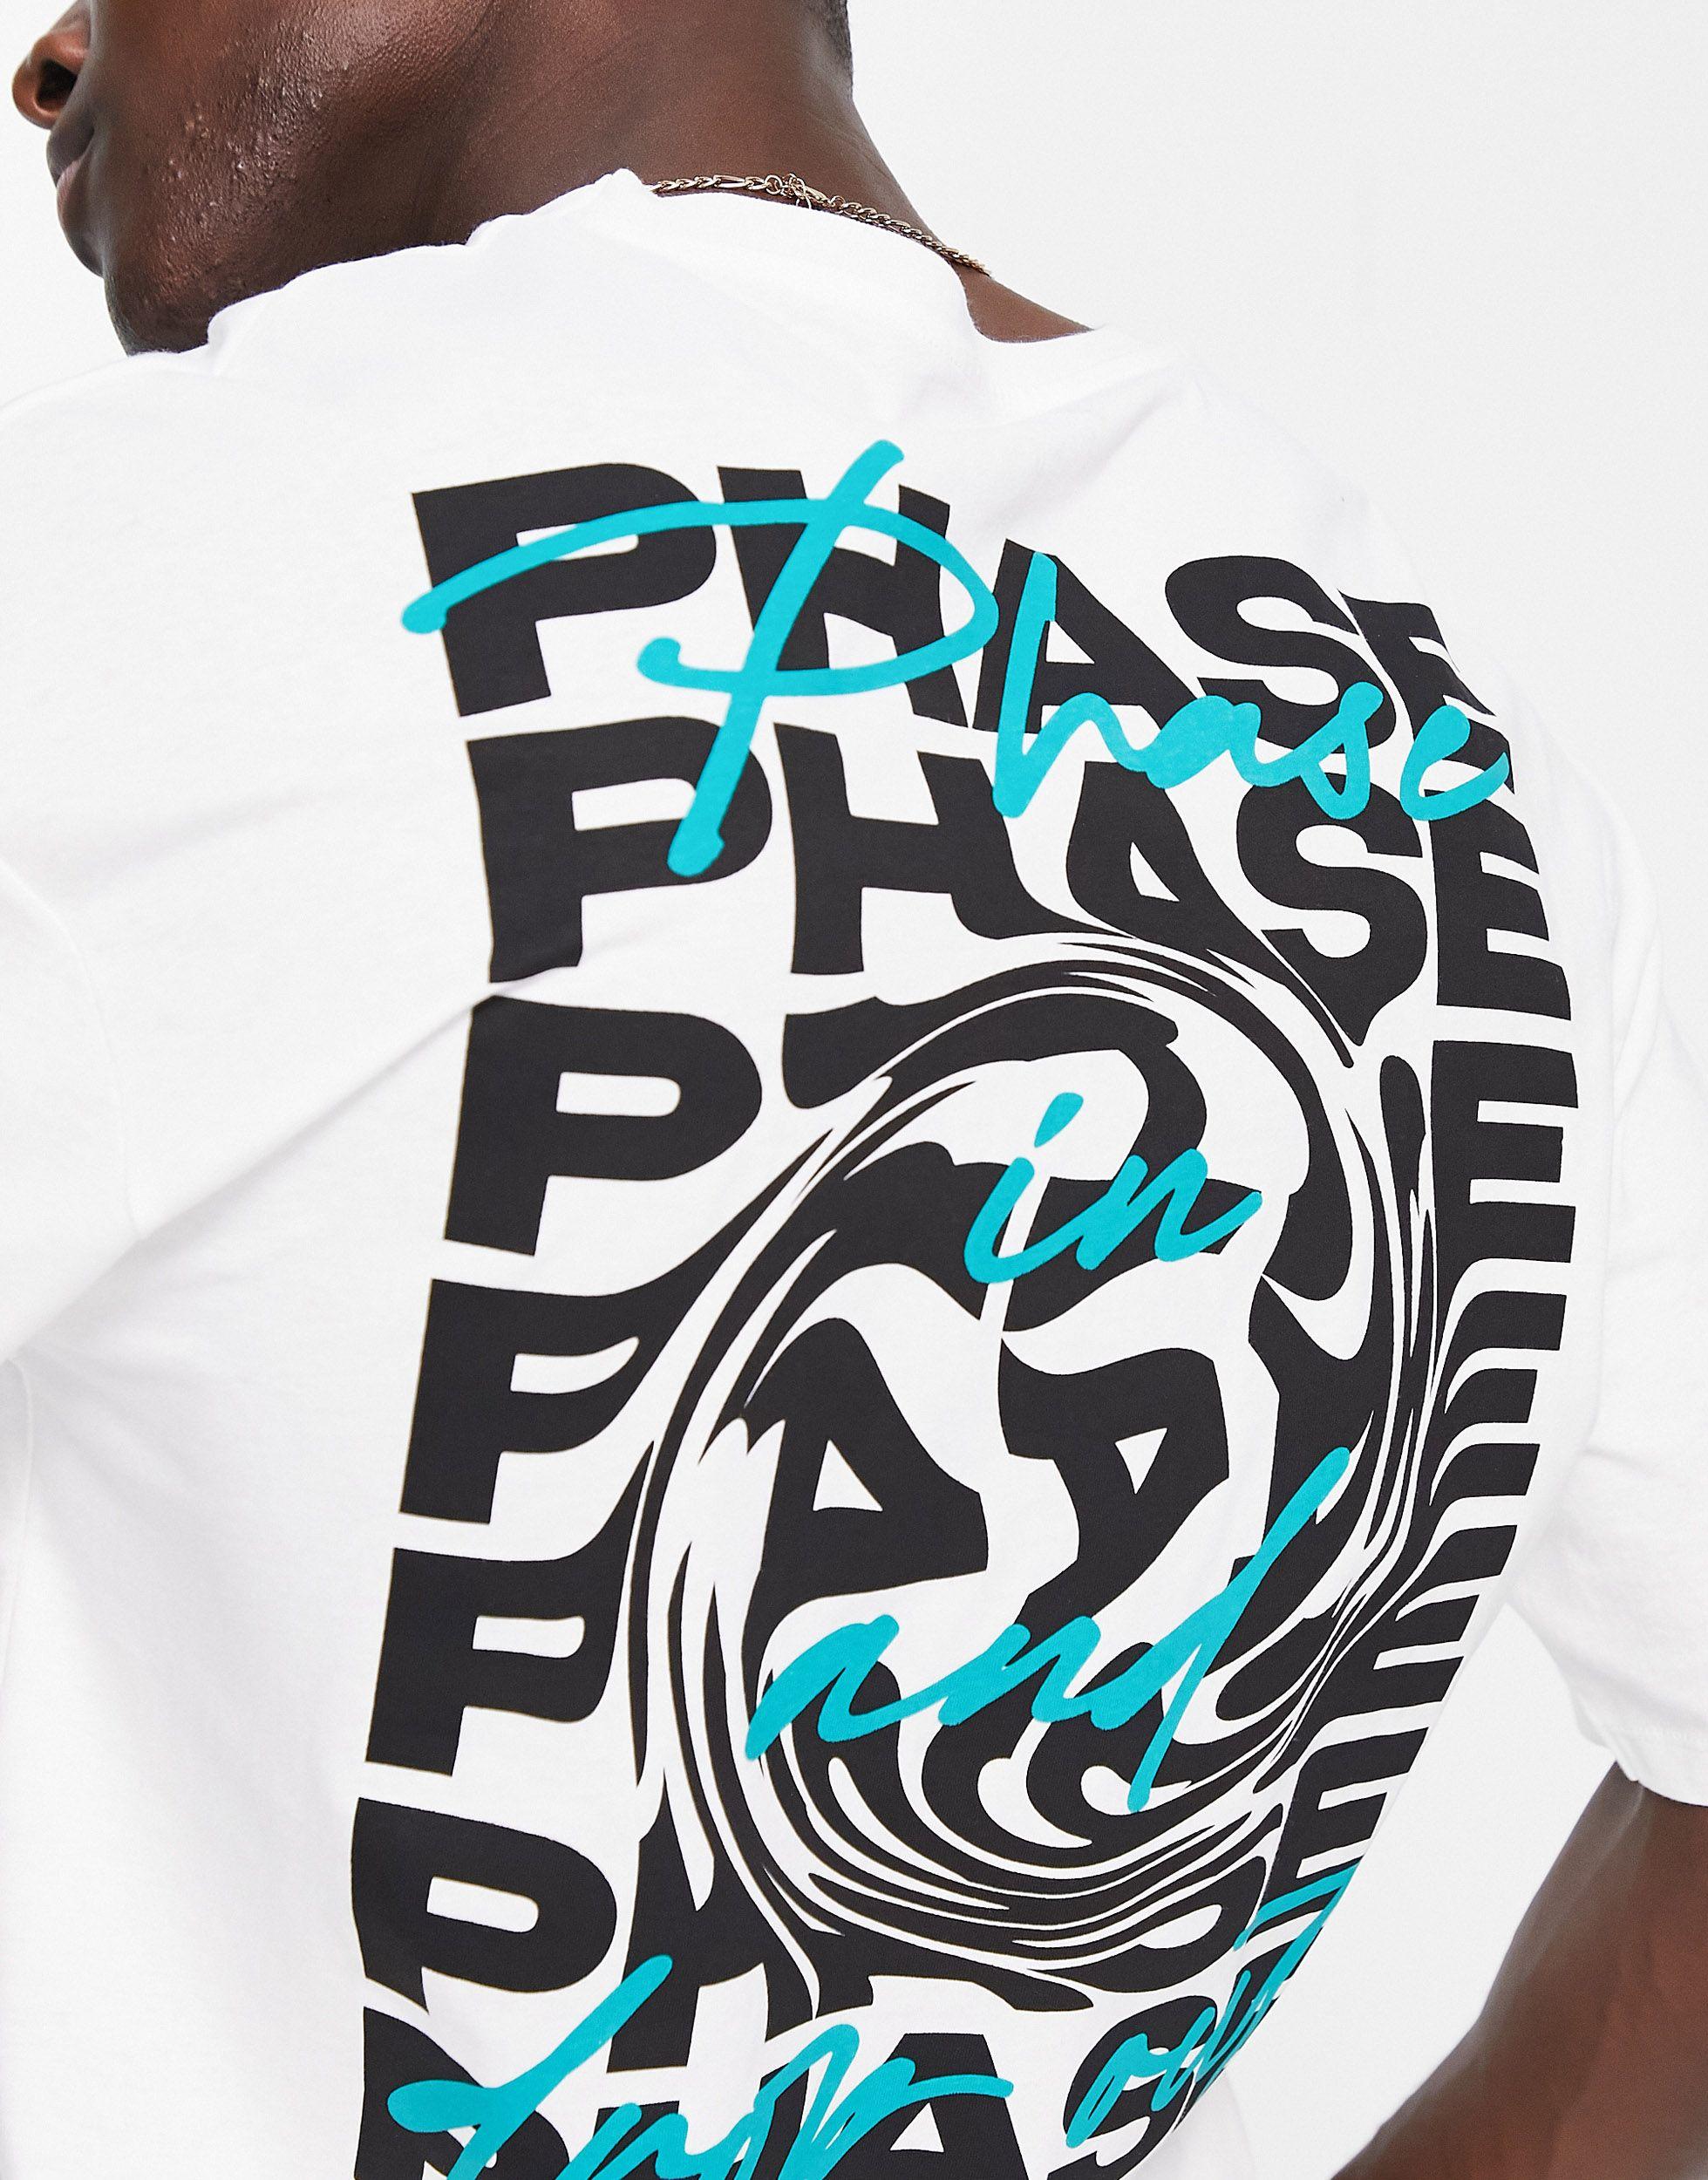 Jack & Jones Originals Oversized T-shirt With Phase Back Print in White for  Men | Lyst